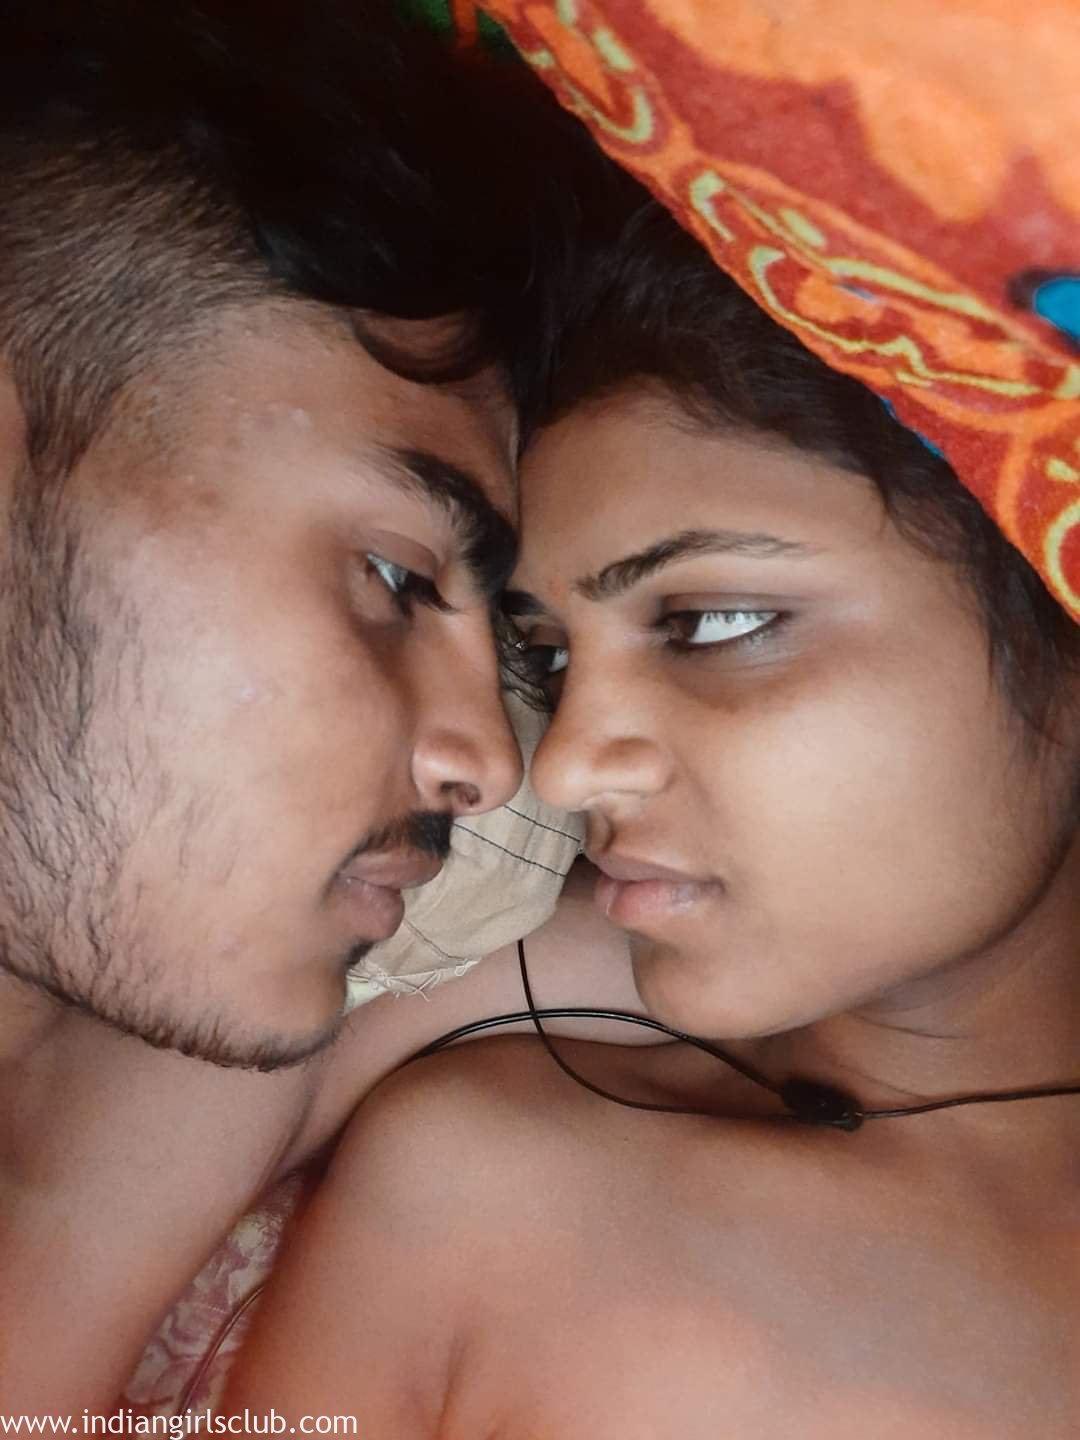 Tamil College Couple Romantic Bedroom Sex In Desi Style image